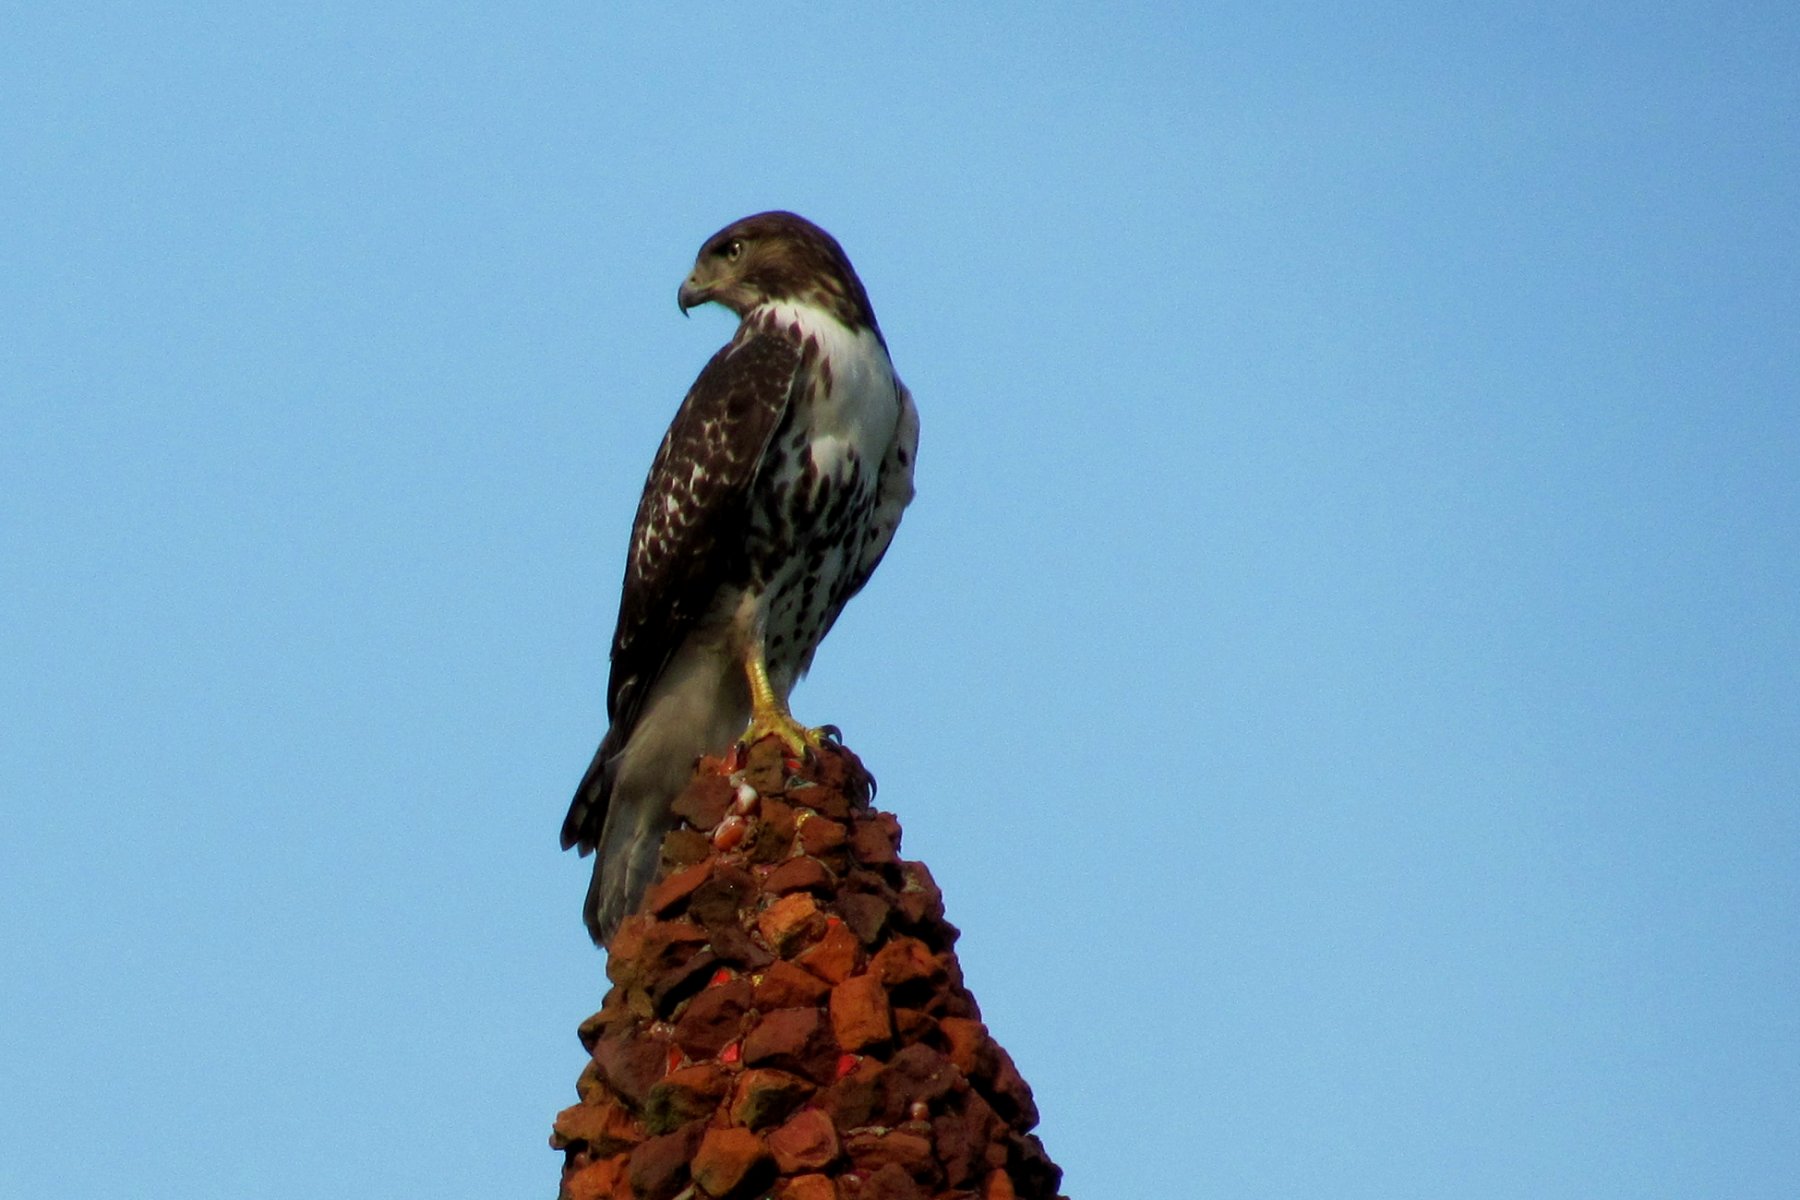 "Hawk perched on Crossroads